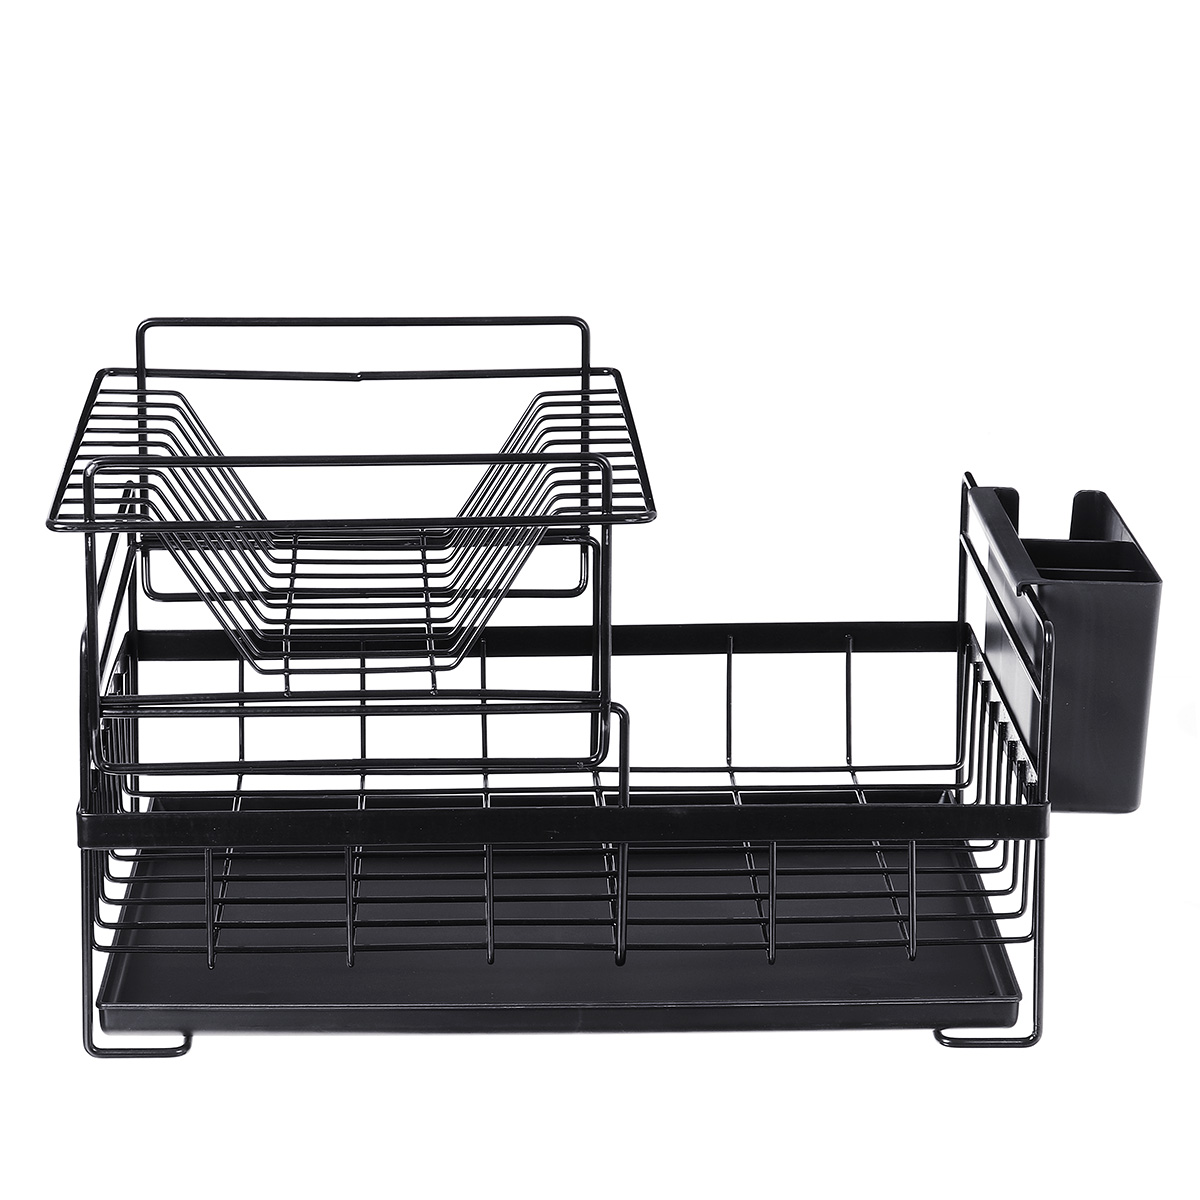 Metal-Multi-Layer-Dish-Rack-Drainer-Drying-Dish-Tray-Holder-Kitchen-Organizer-Home-Kitchener-Storage-1768546-16